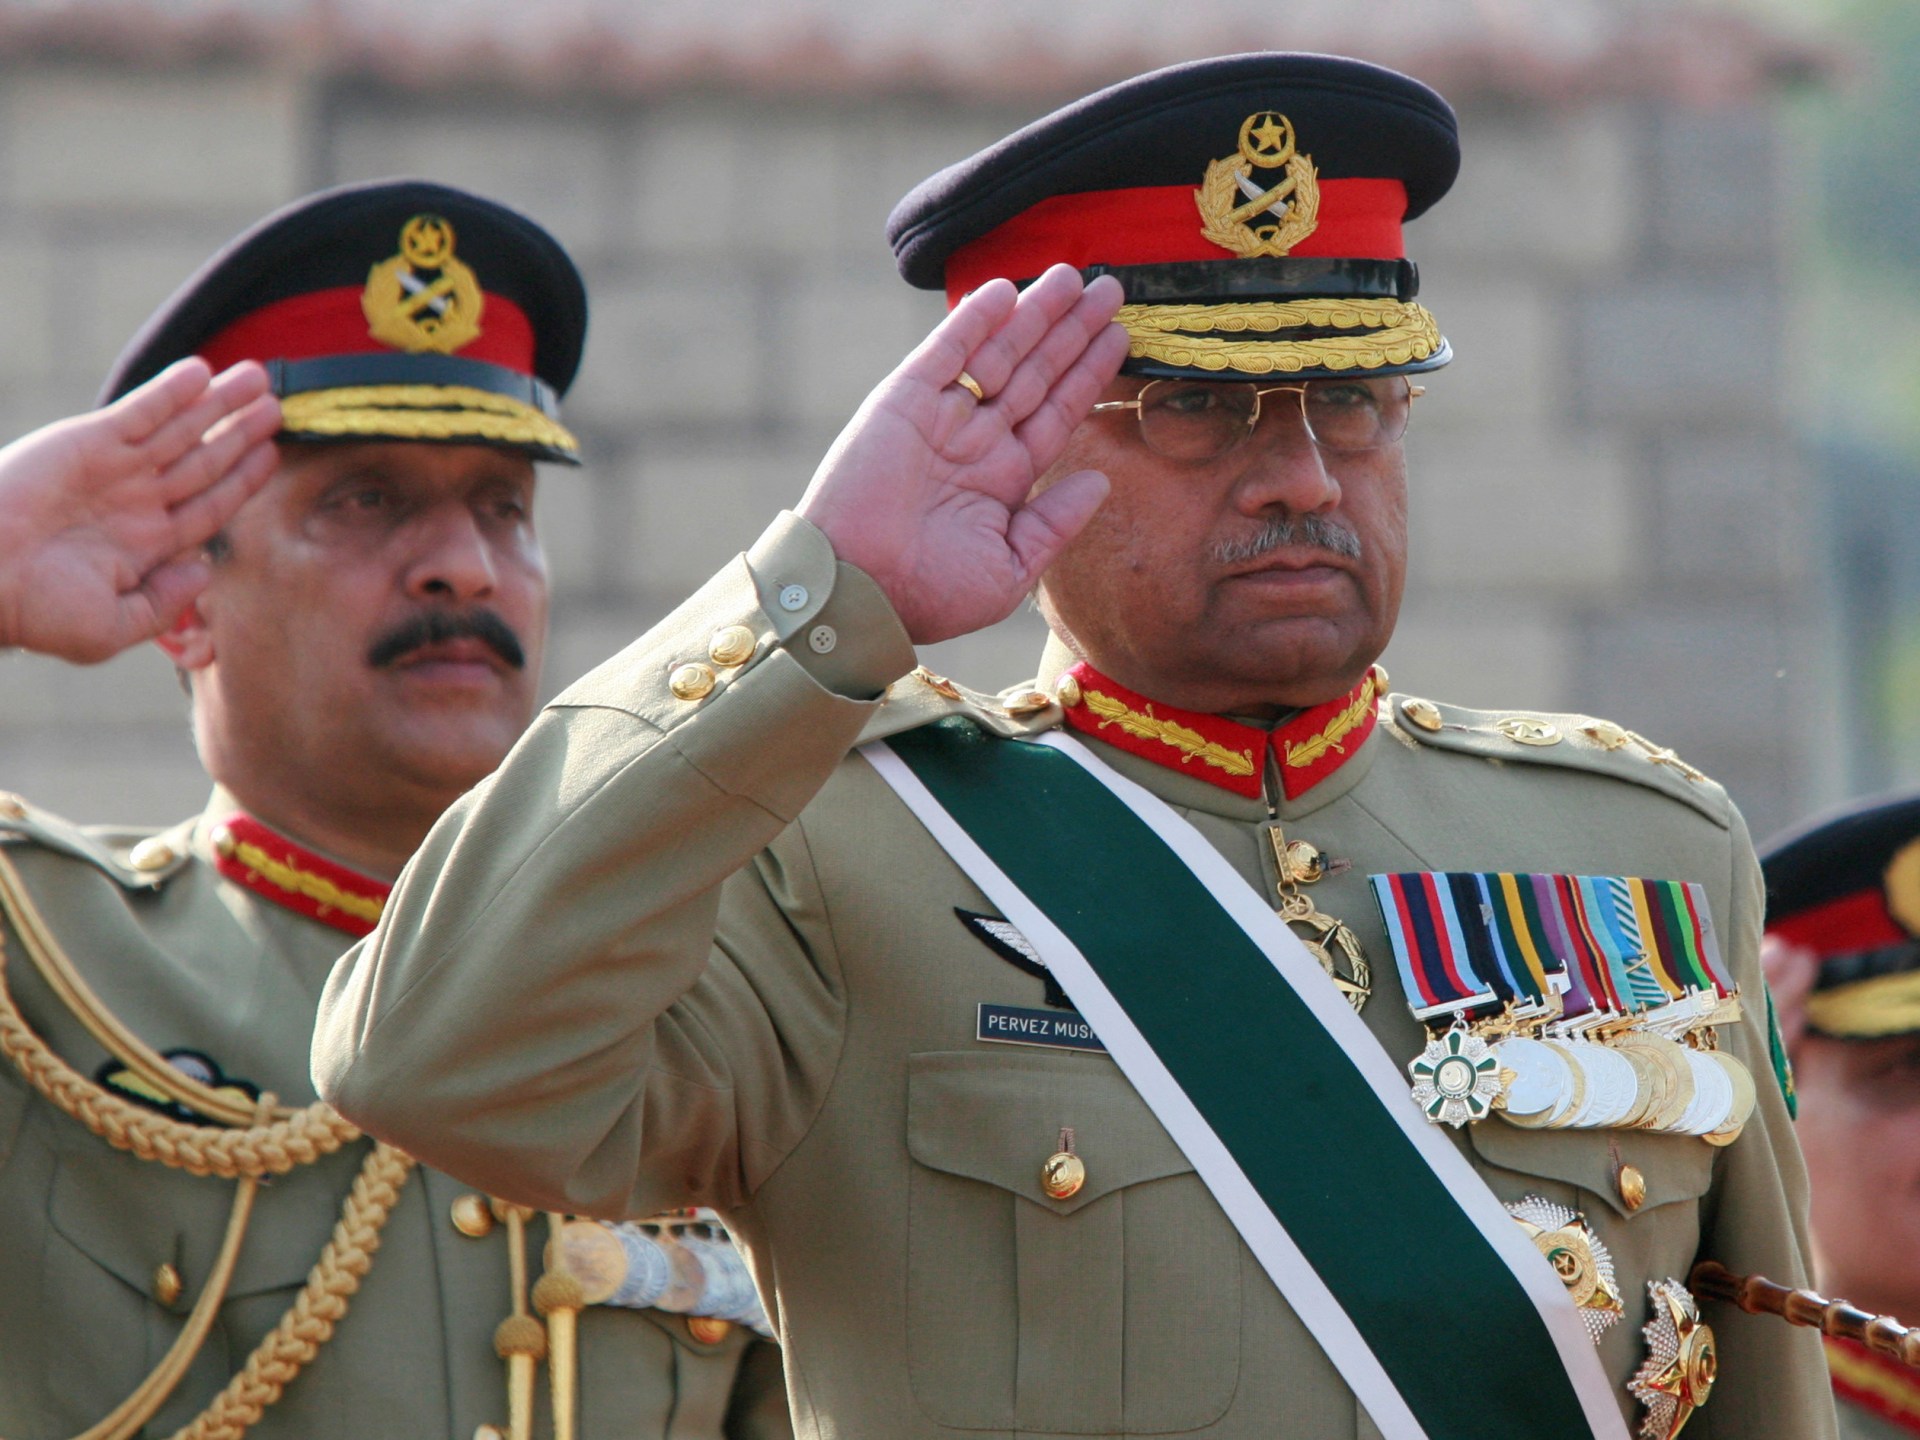 Pervez Musharraf, ex-military ruler of Pakistan, laid to rest